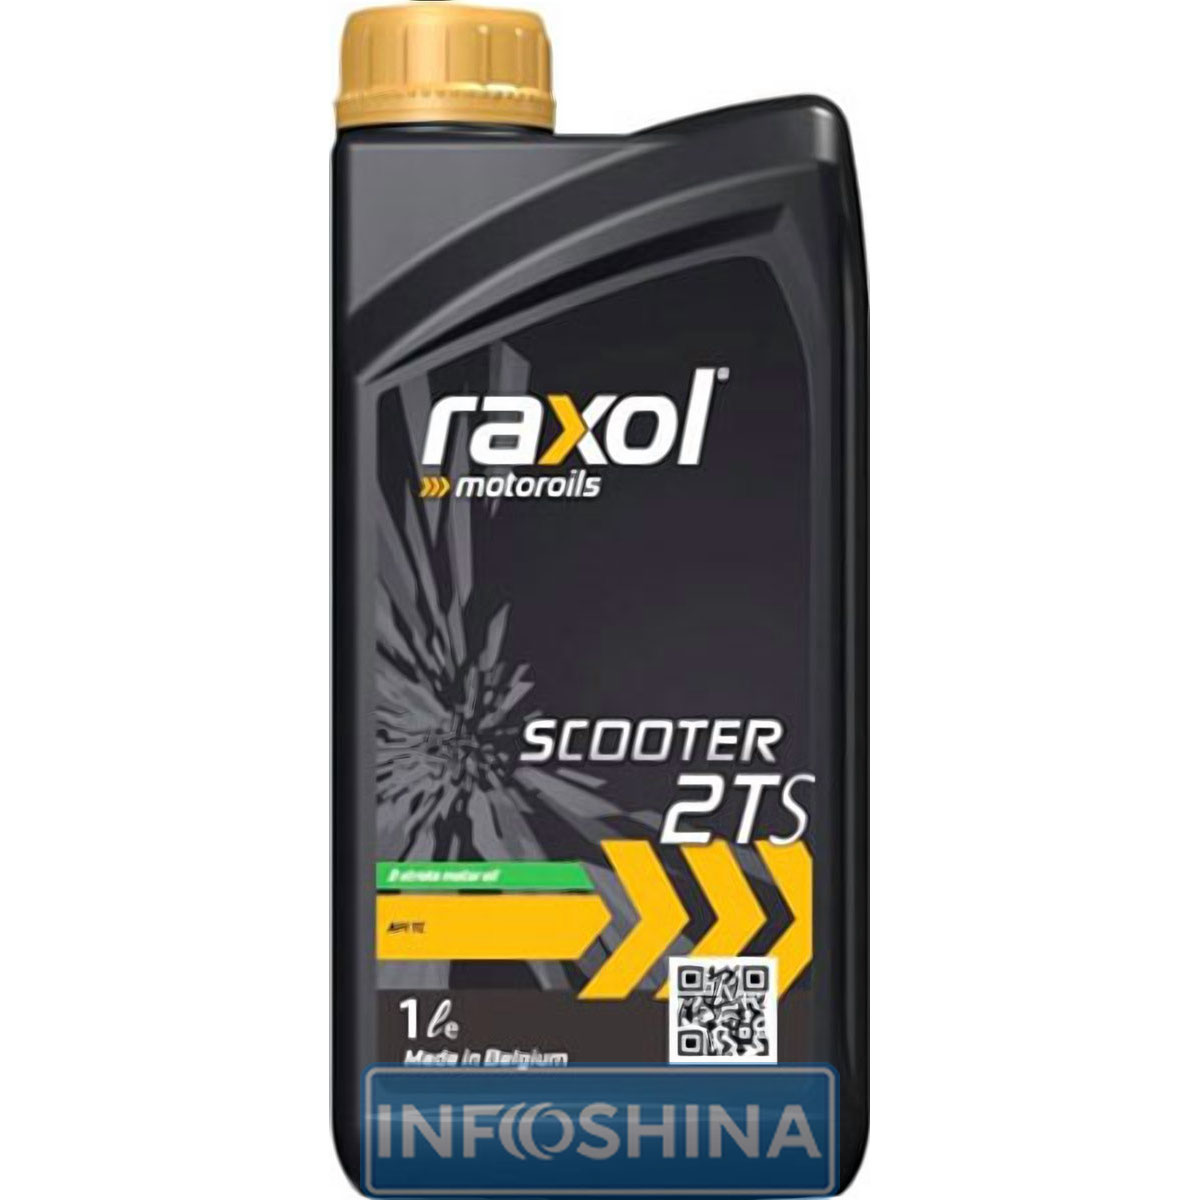 Купить масло Raxol Scooter 2TS (1л)